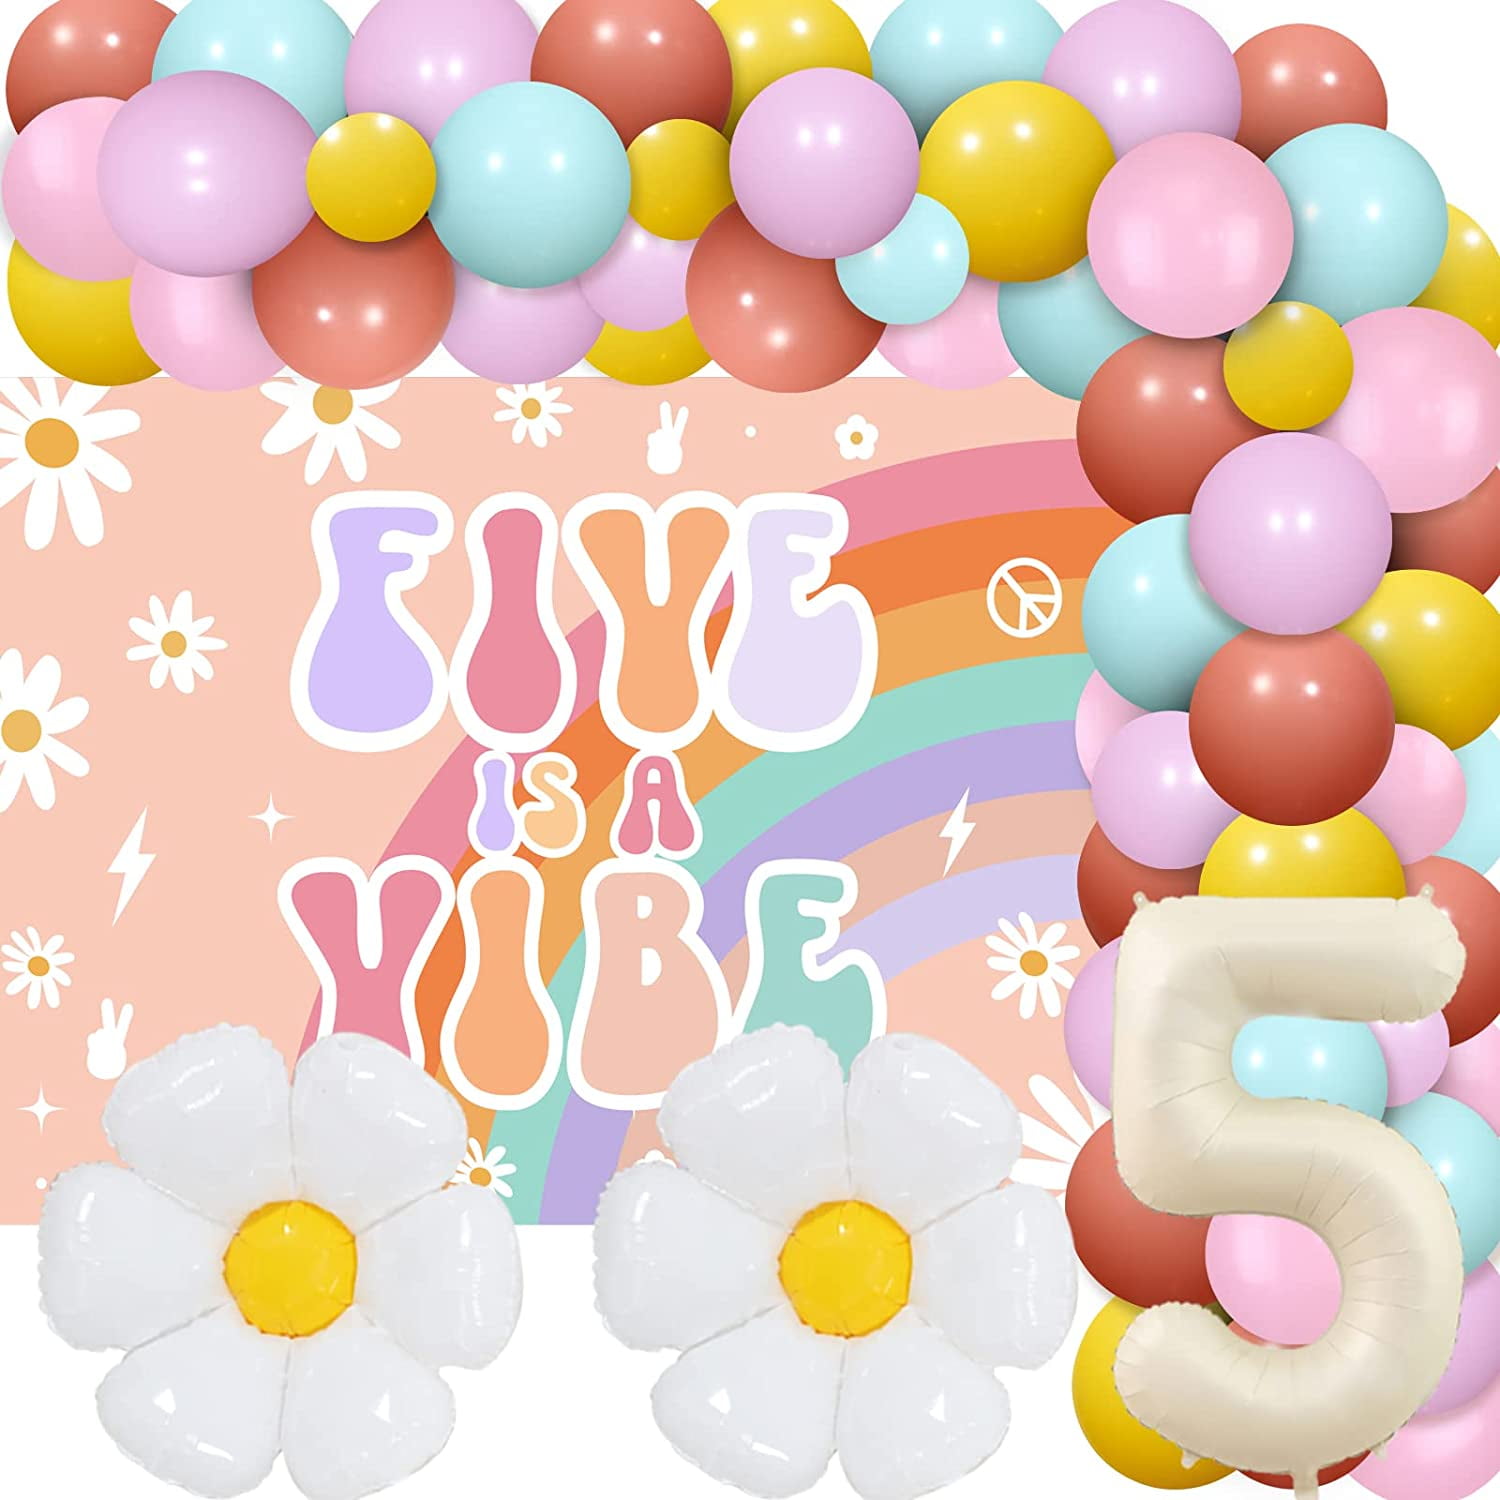 50 Pieces Balloon Pastel Color, Balloon Pastel Colors Party